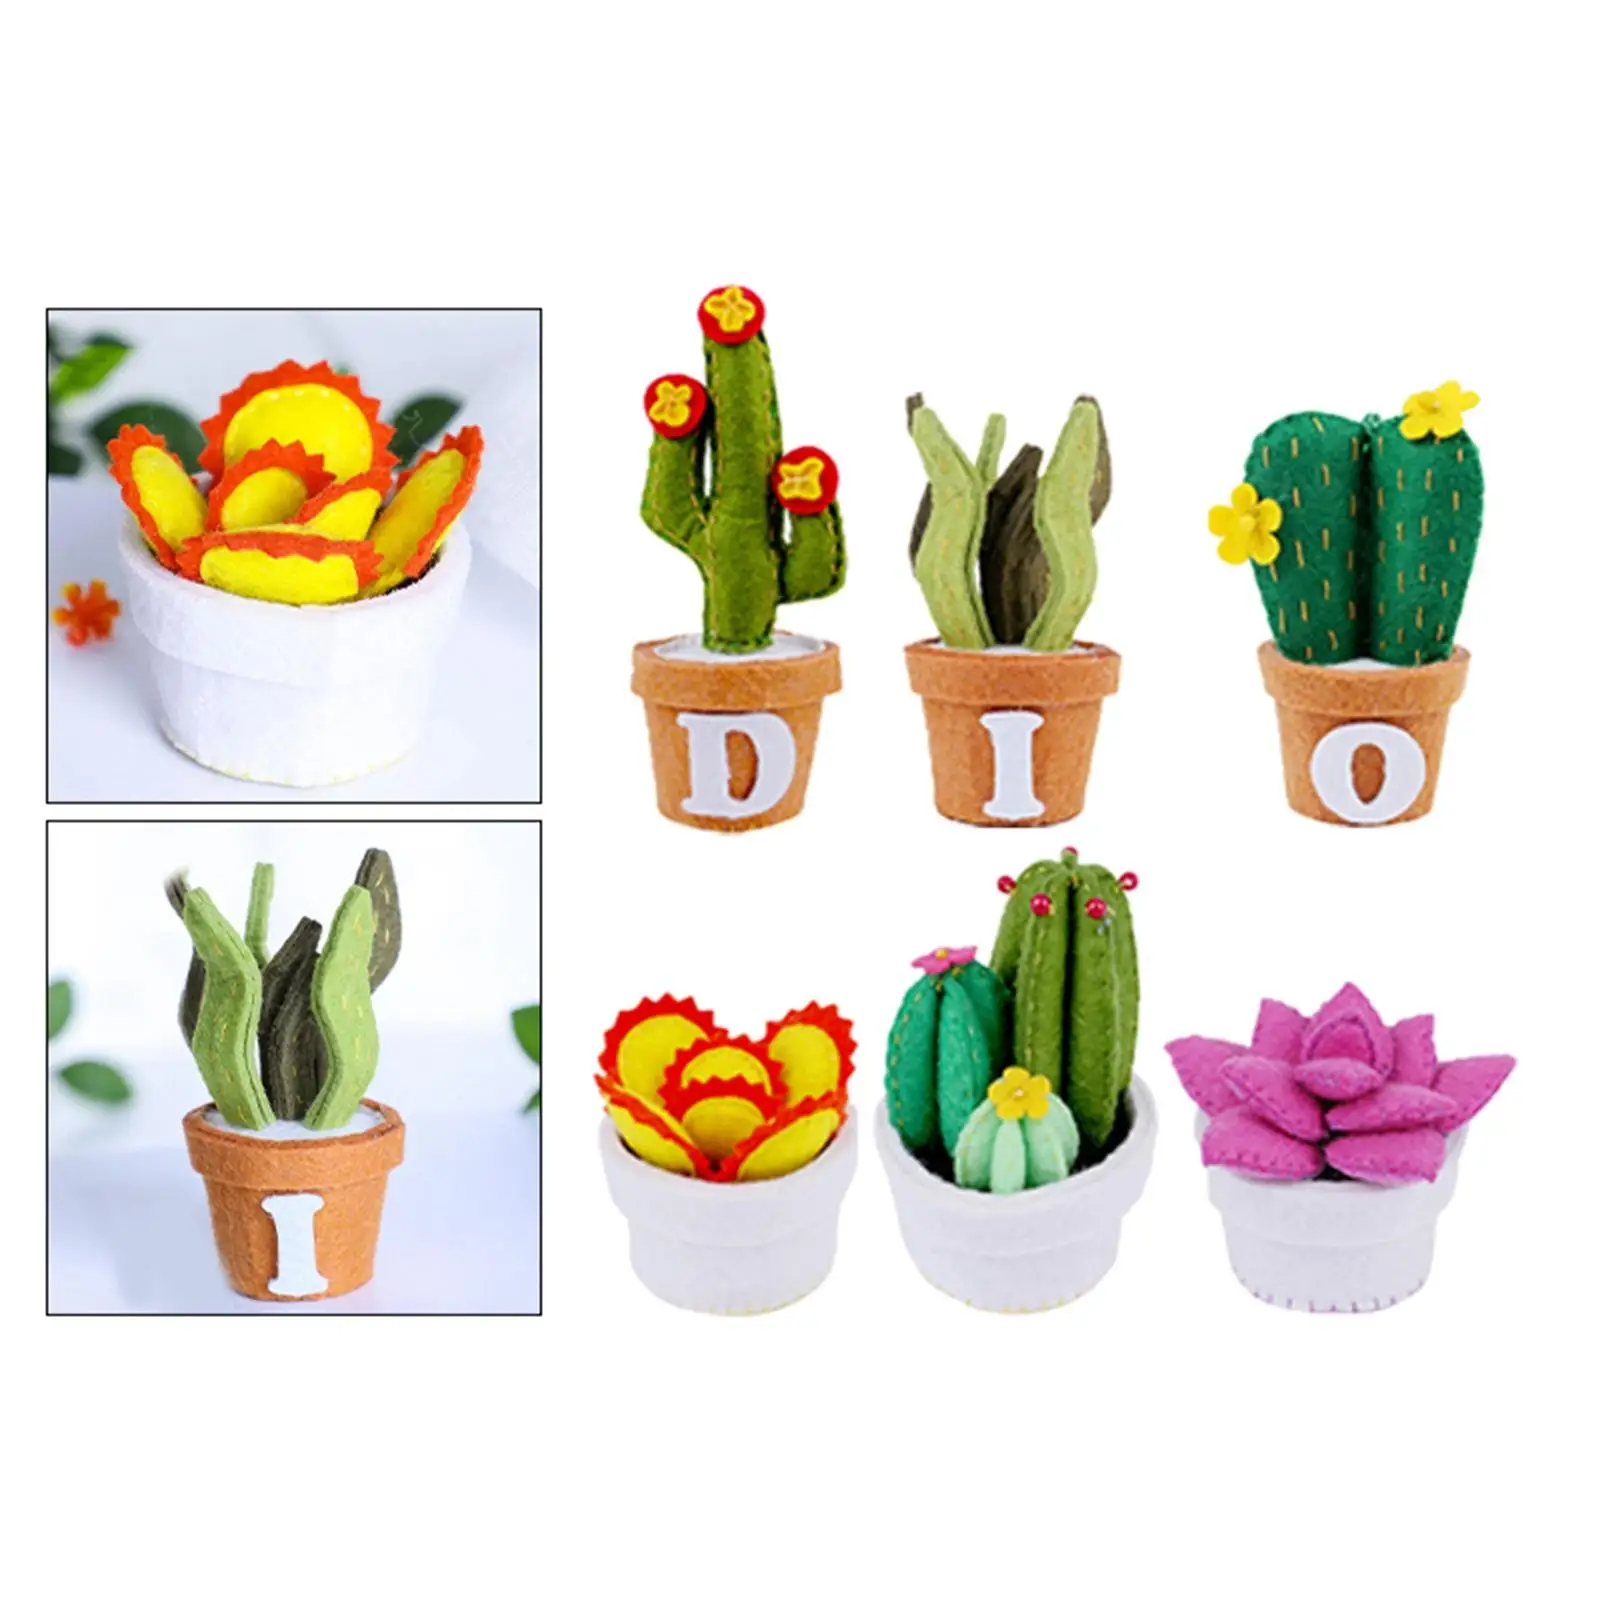 Creative DIY Felt Succulent Plant Craft Kit Cut Free Small Bonsai Mothers Day Gift for Halloween Beginner Children Room New Year